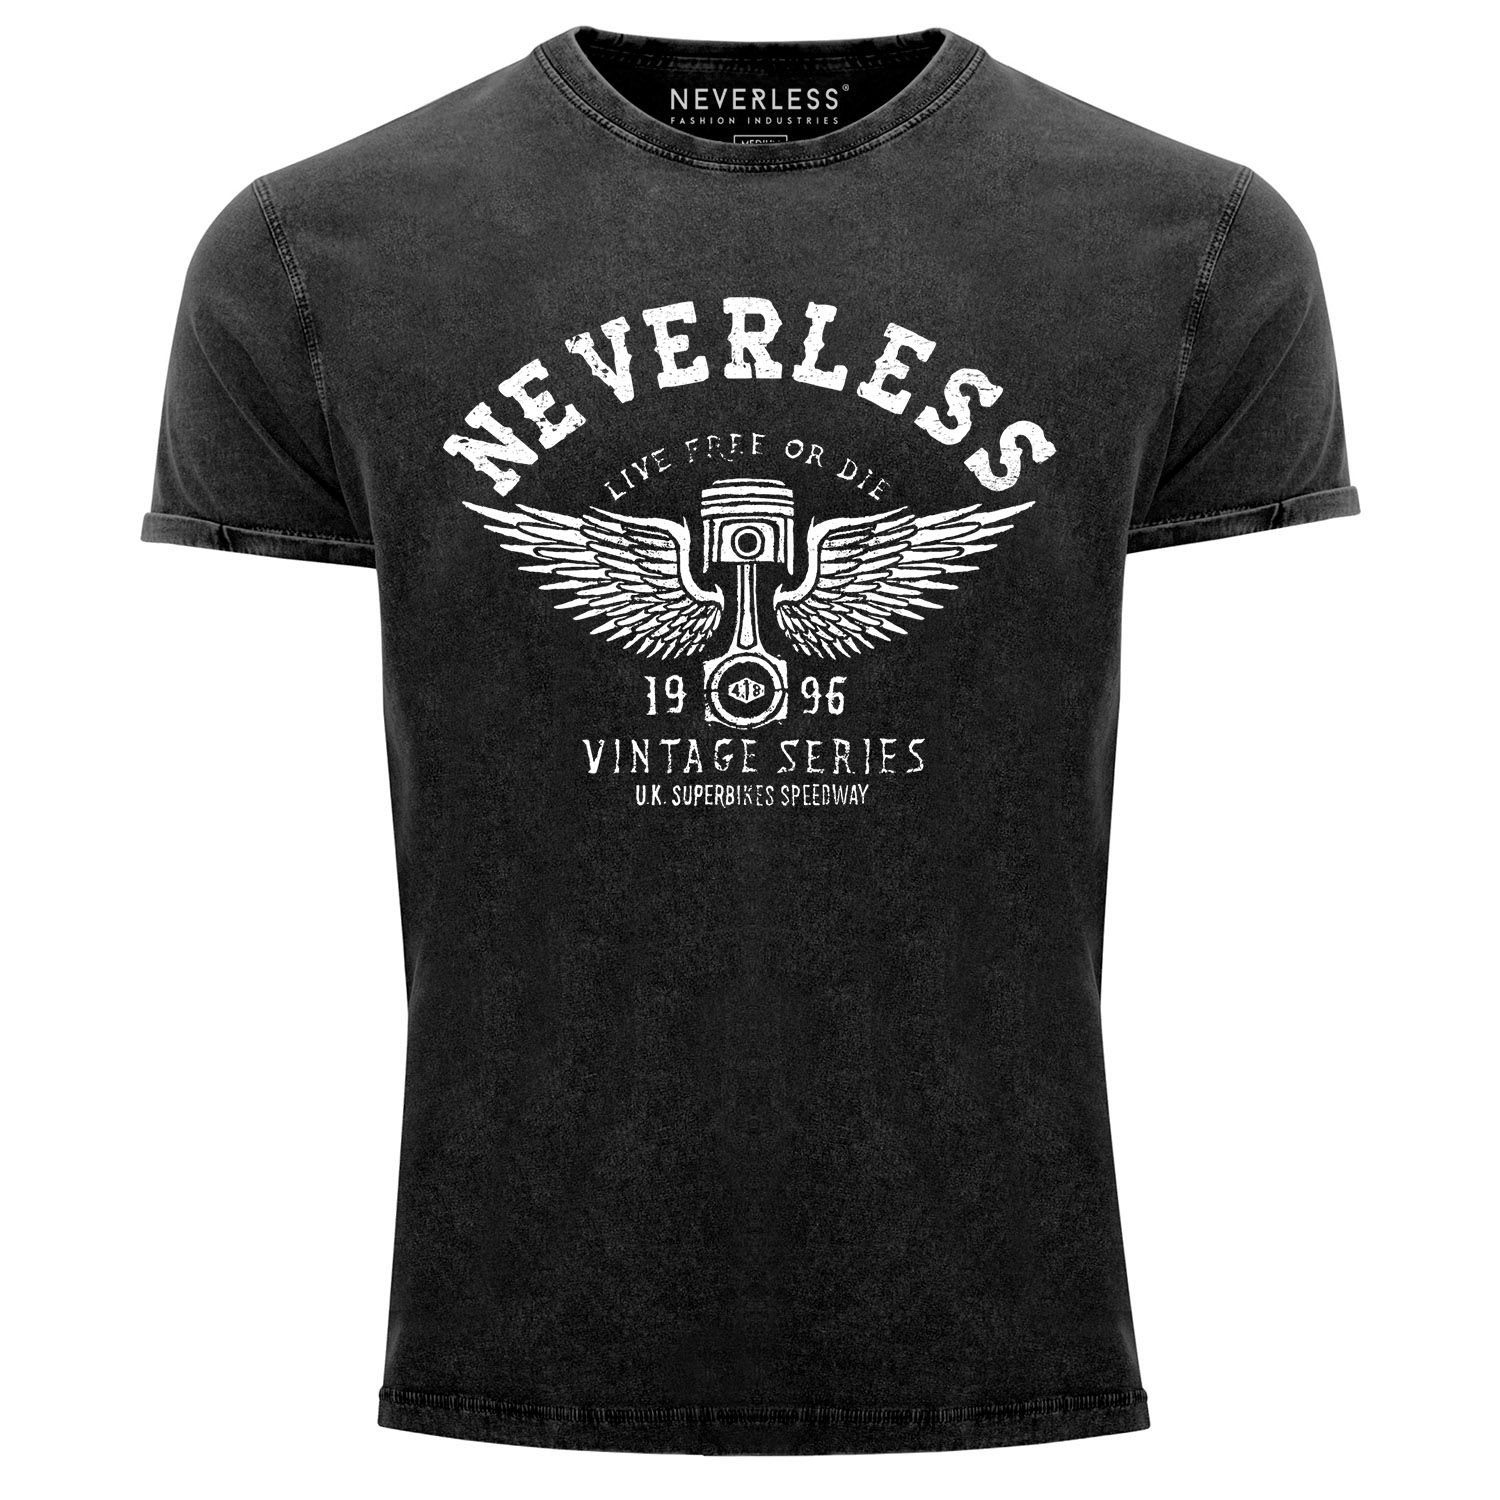 mit Vintage Print Kolben Neverless® T-Shirt Herren Cooles Angesagtes Used Print-Shirt Neverless Auto Fit schwarz Slim Look Shirt Retro